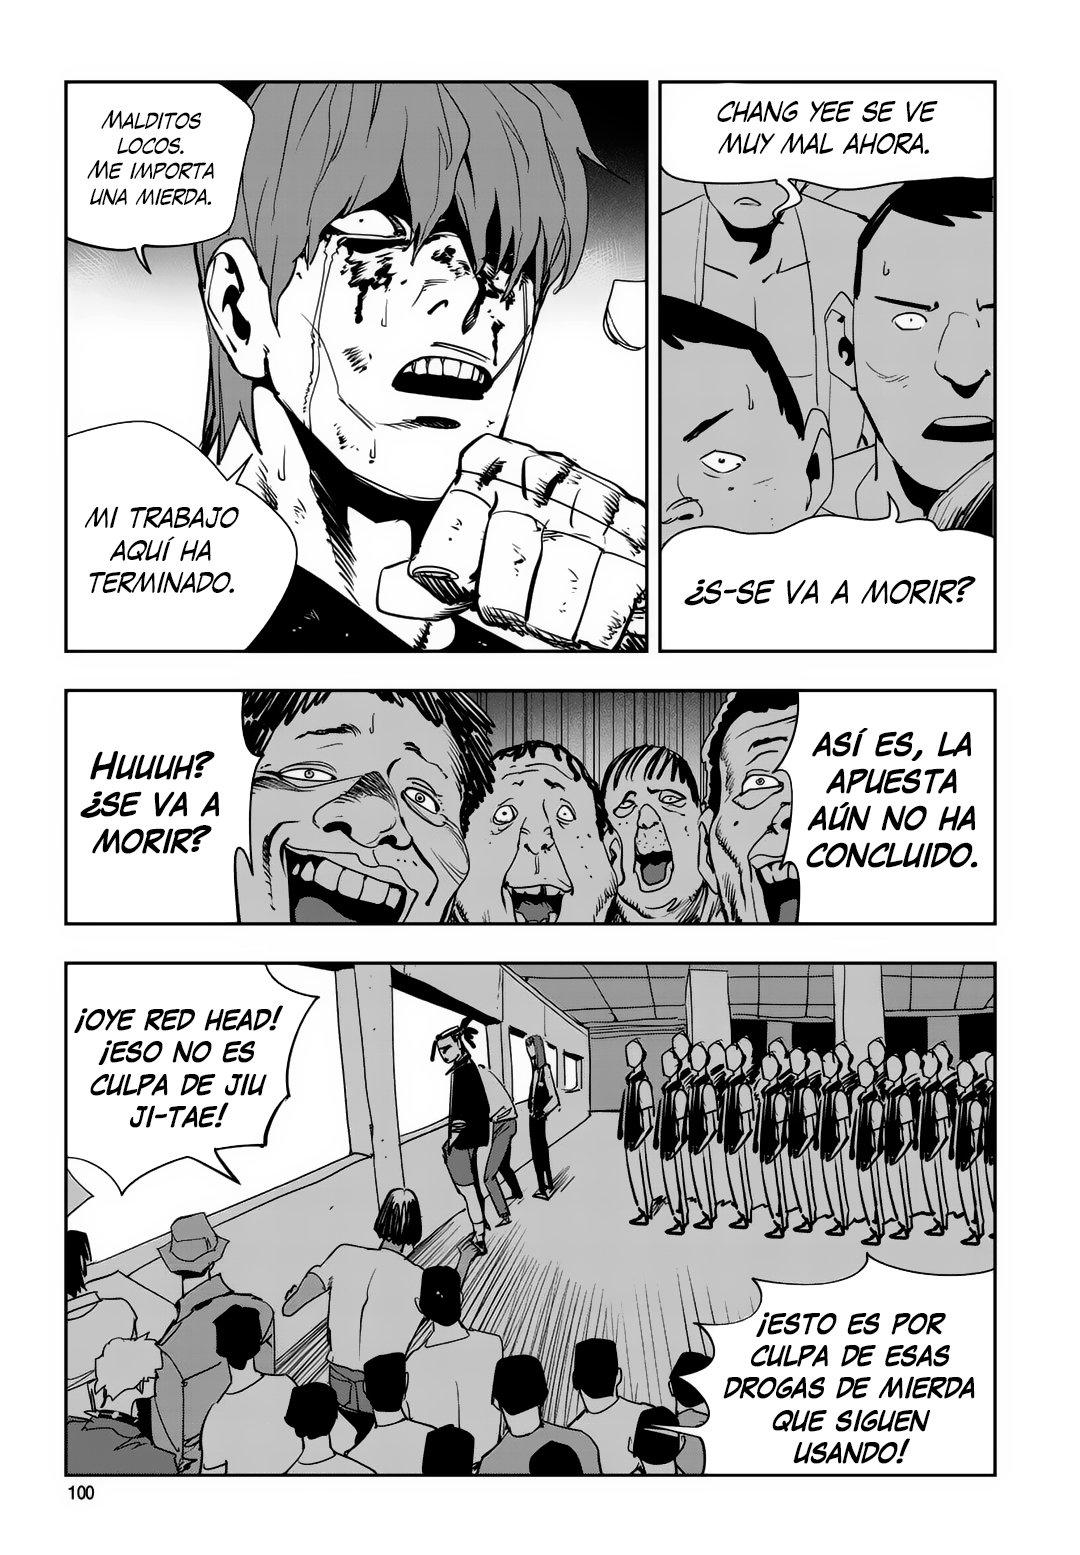 Fight Class 3 Chapter 90 Fight Class 3 - Capitulo 90 | Leer Manga En Linea Gratis Español